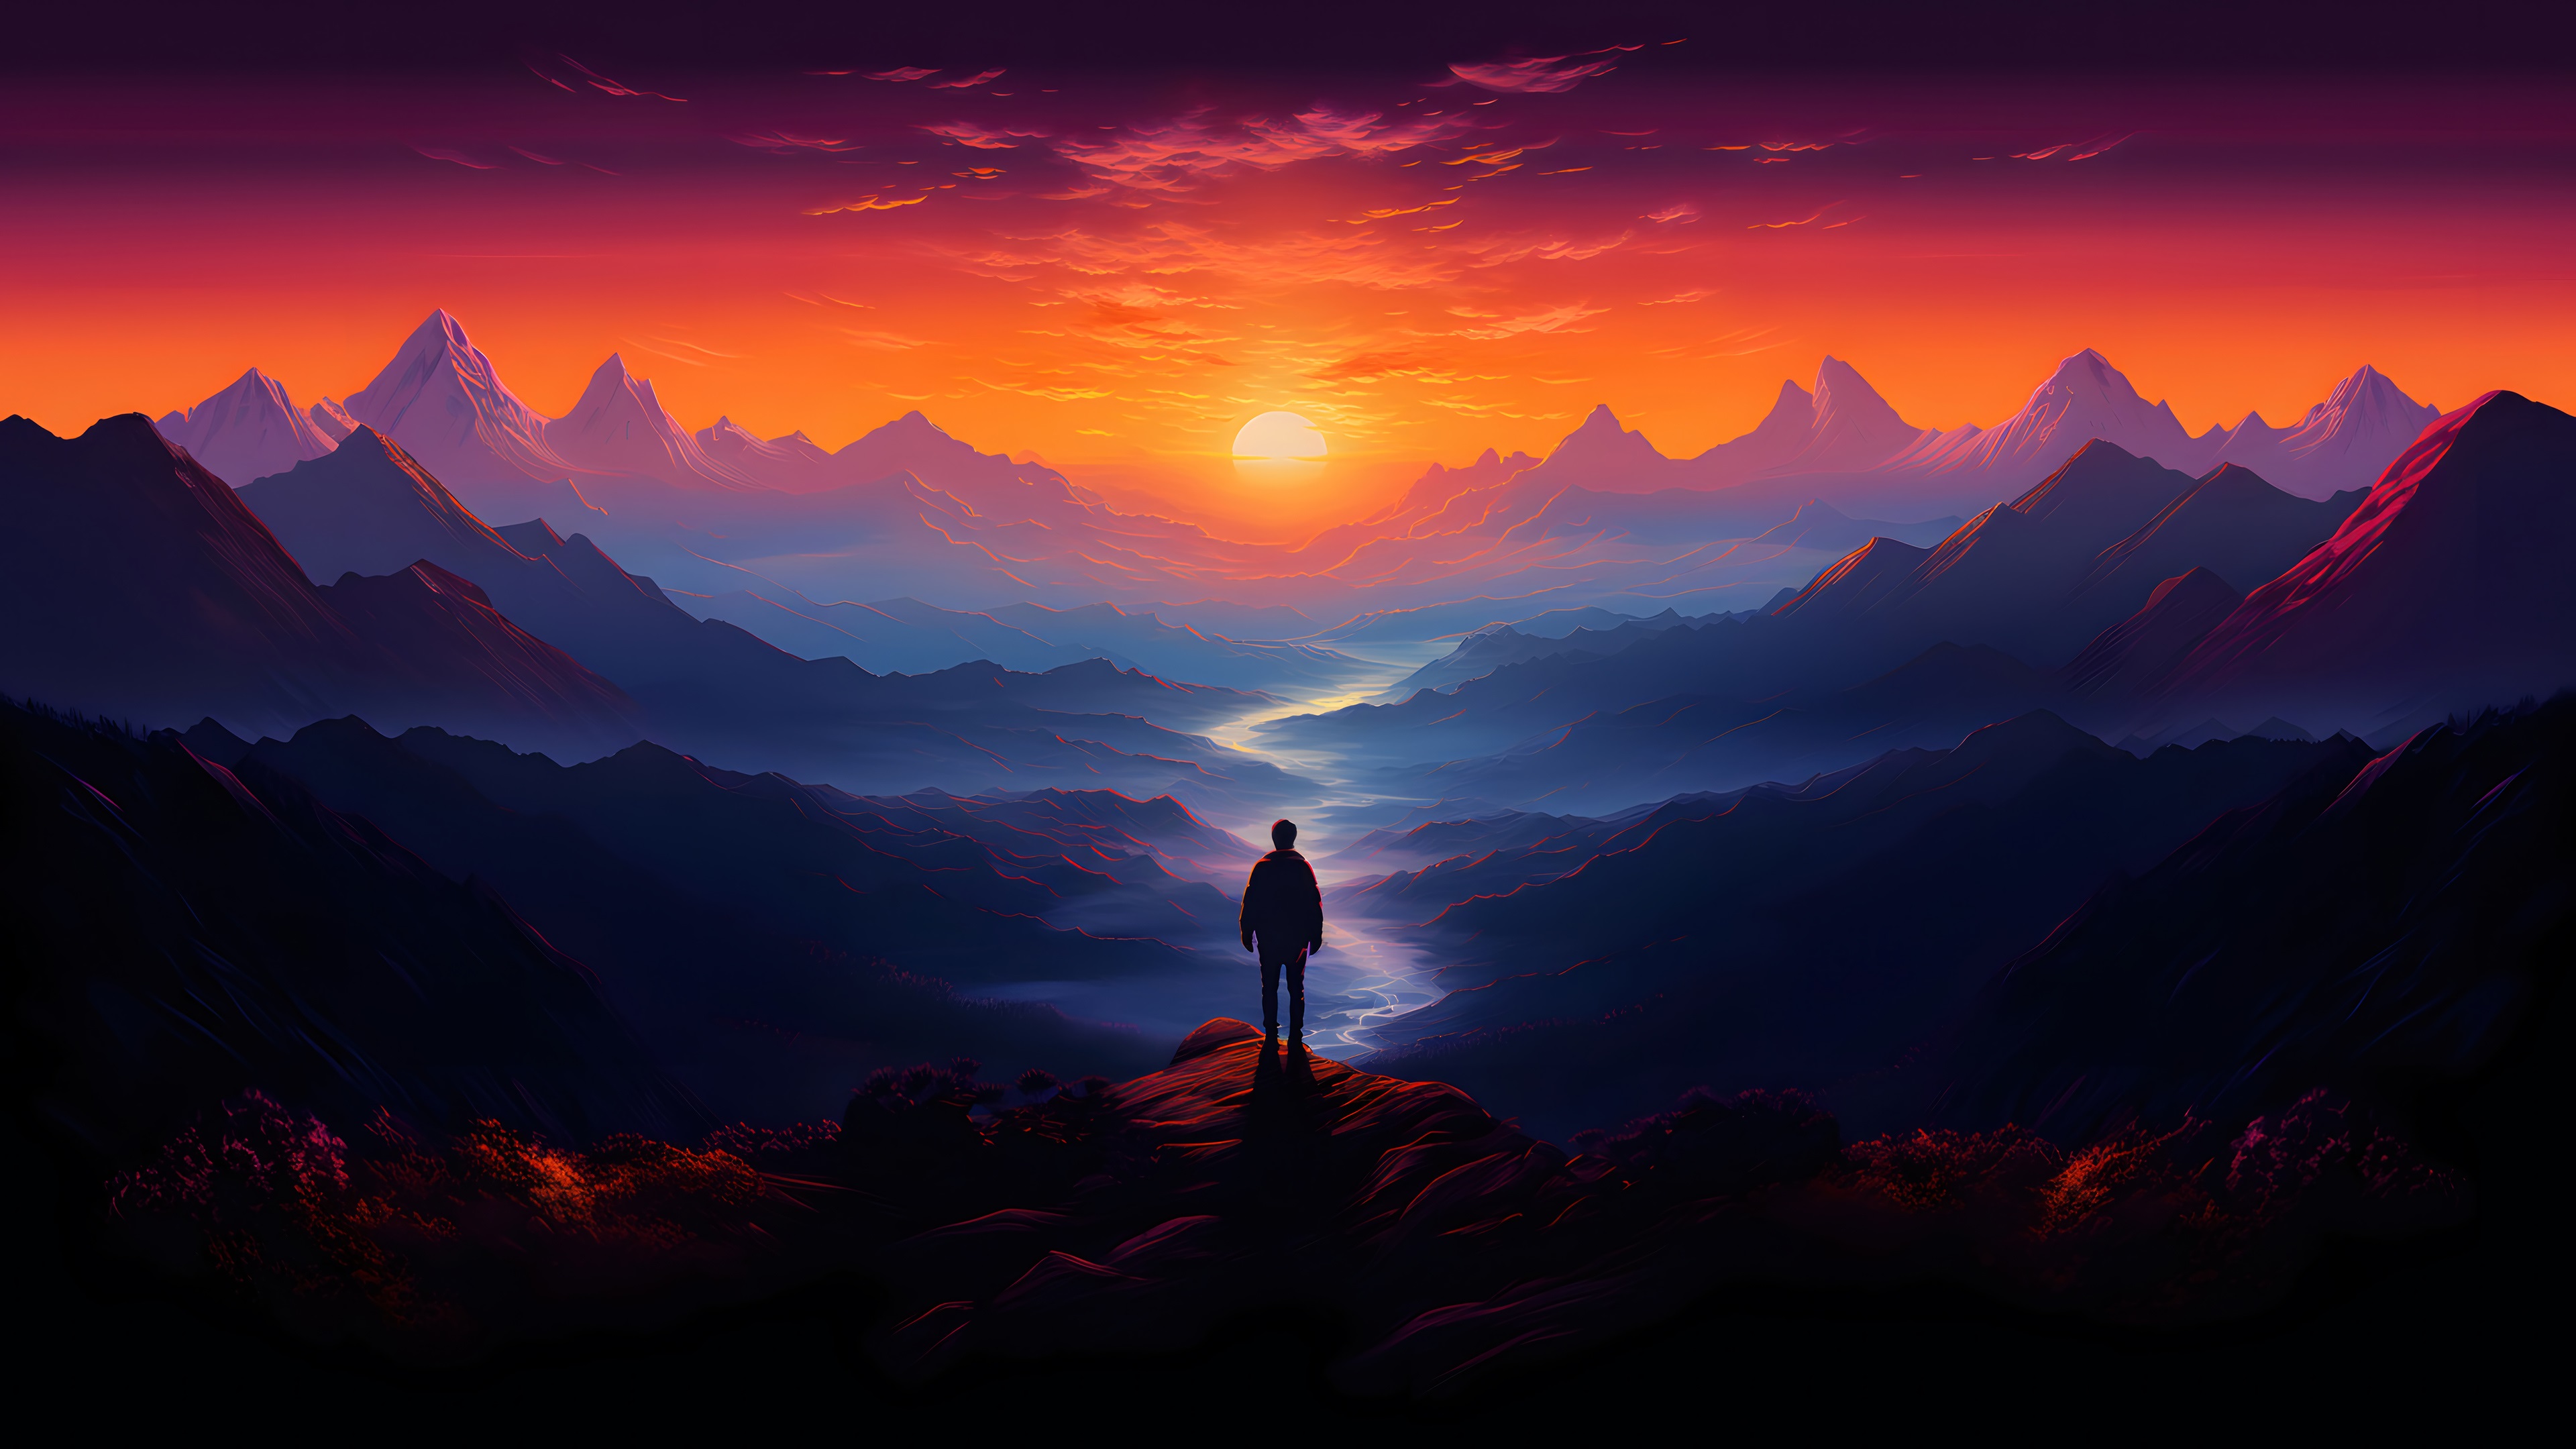 Sunset Horizon Standing Alone Mountains Scenery 4K Desktop PC